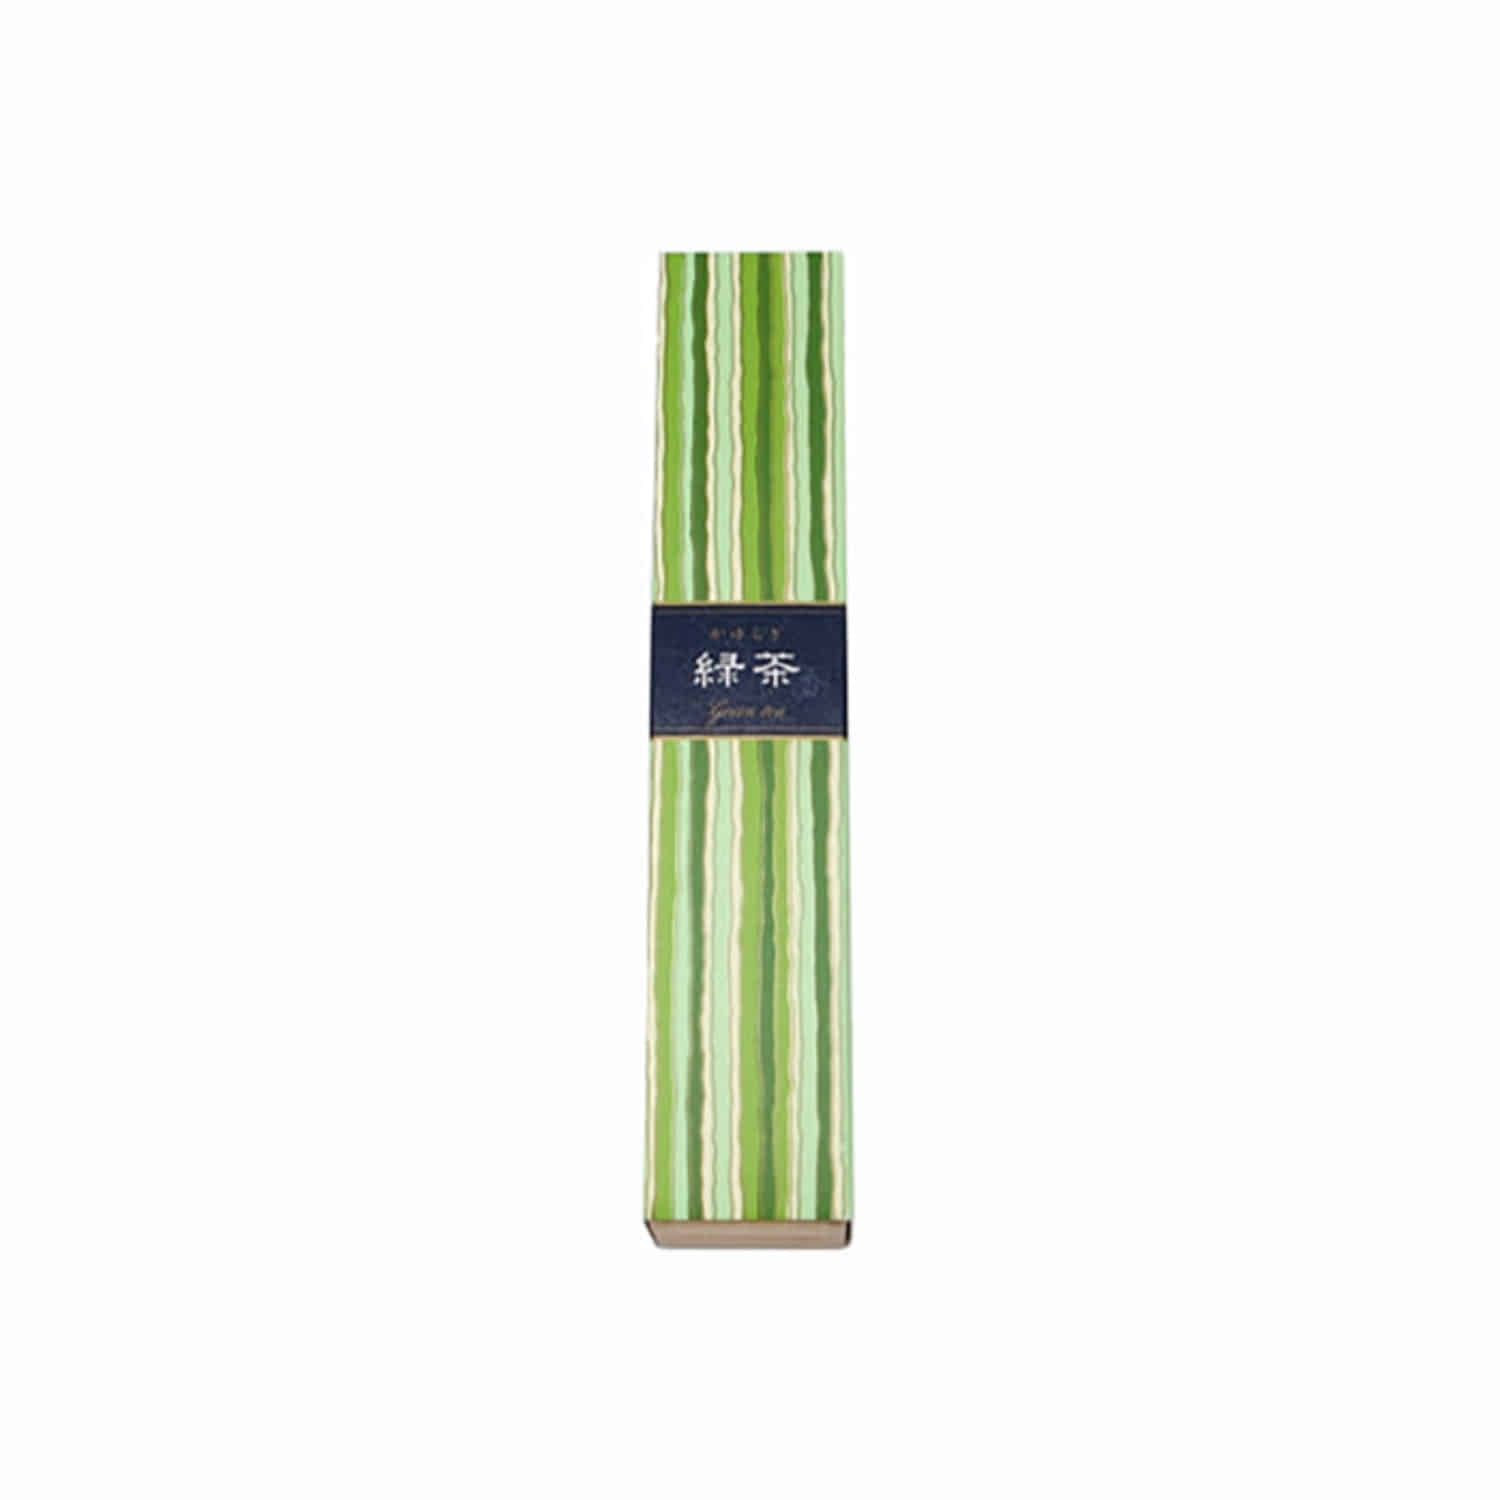 kayuragi green tea incense stick